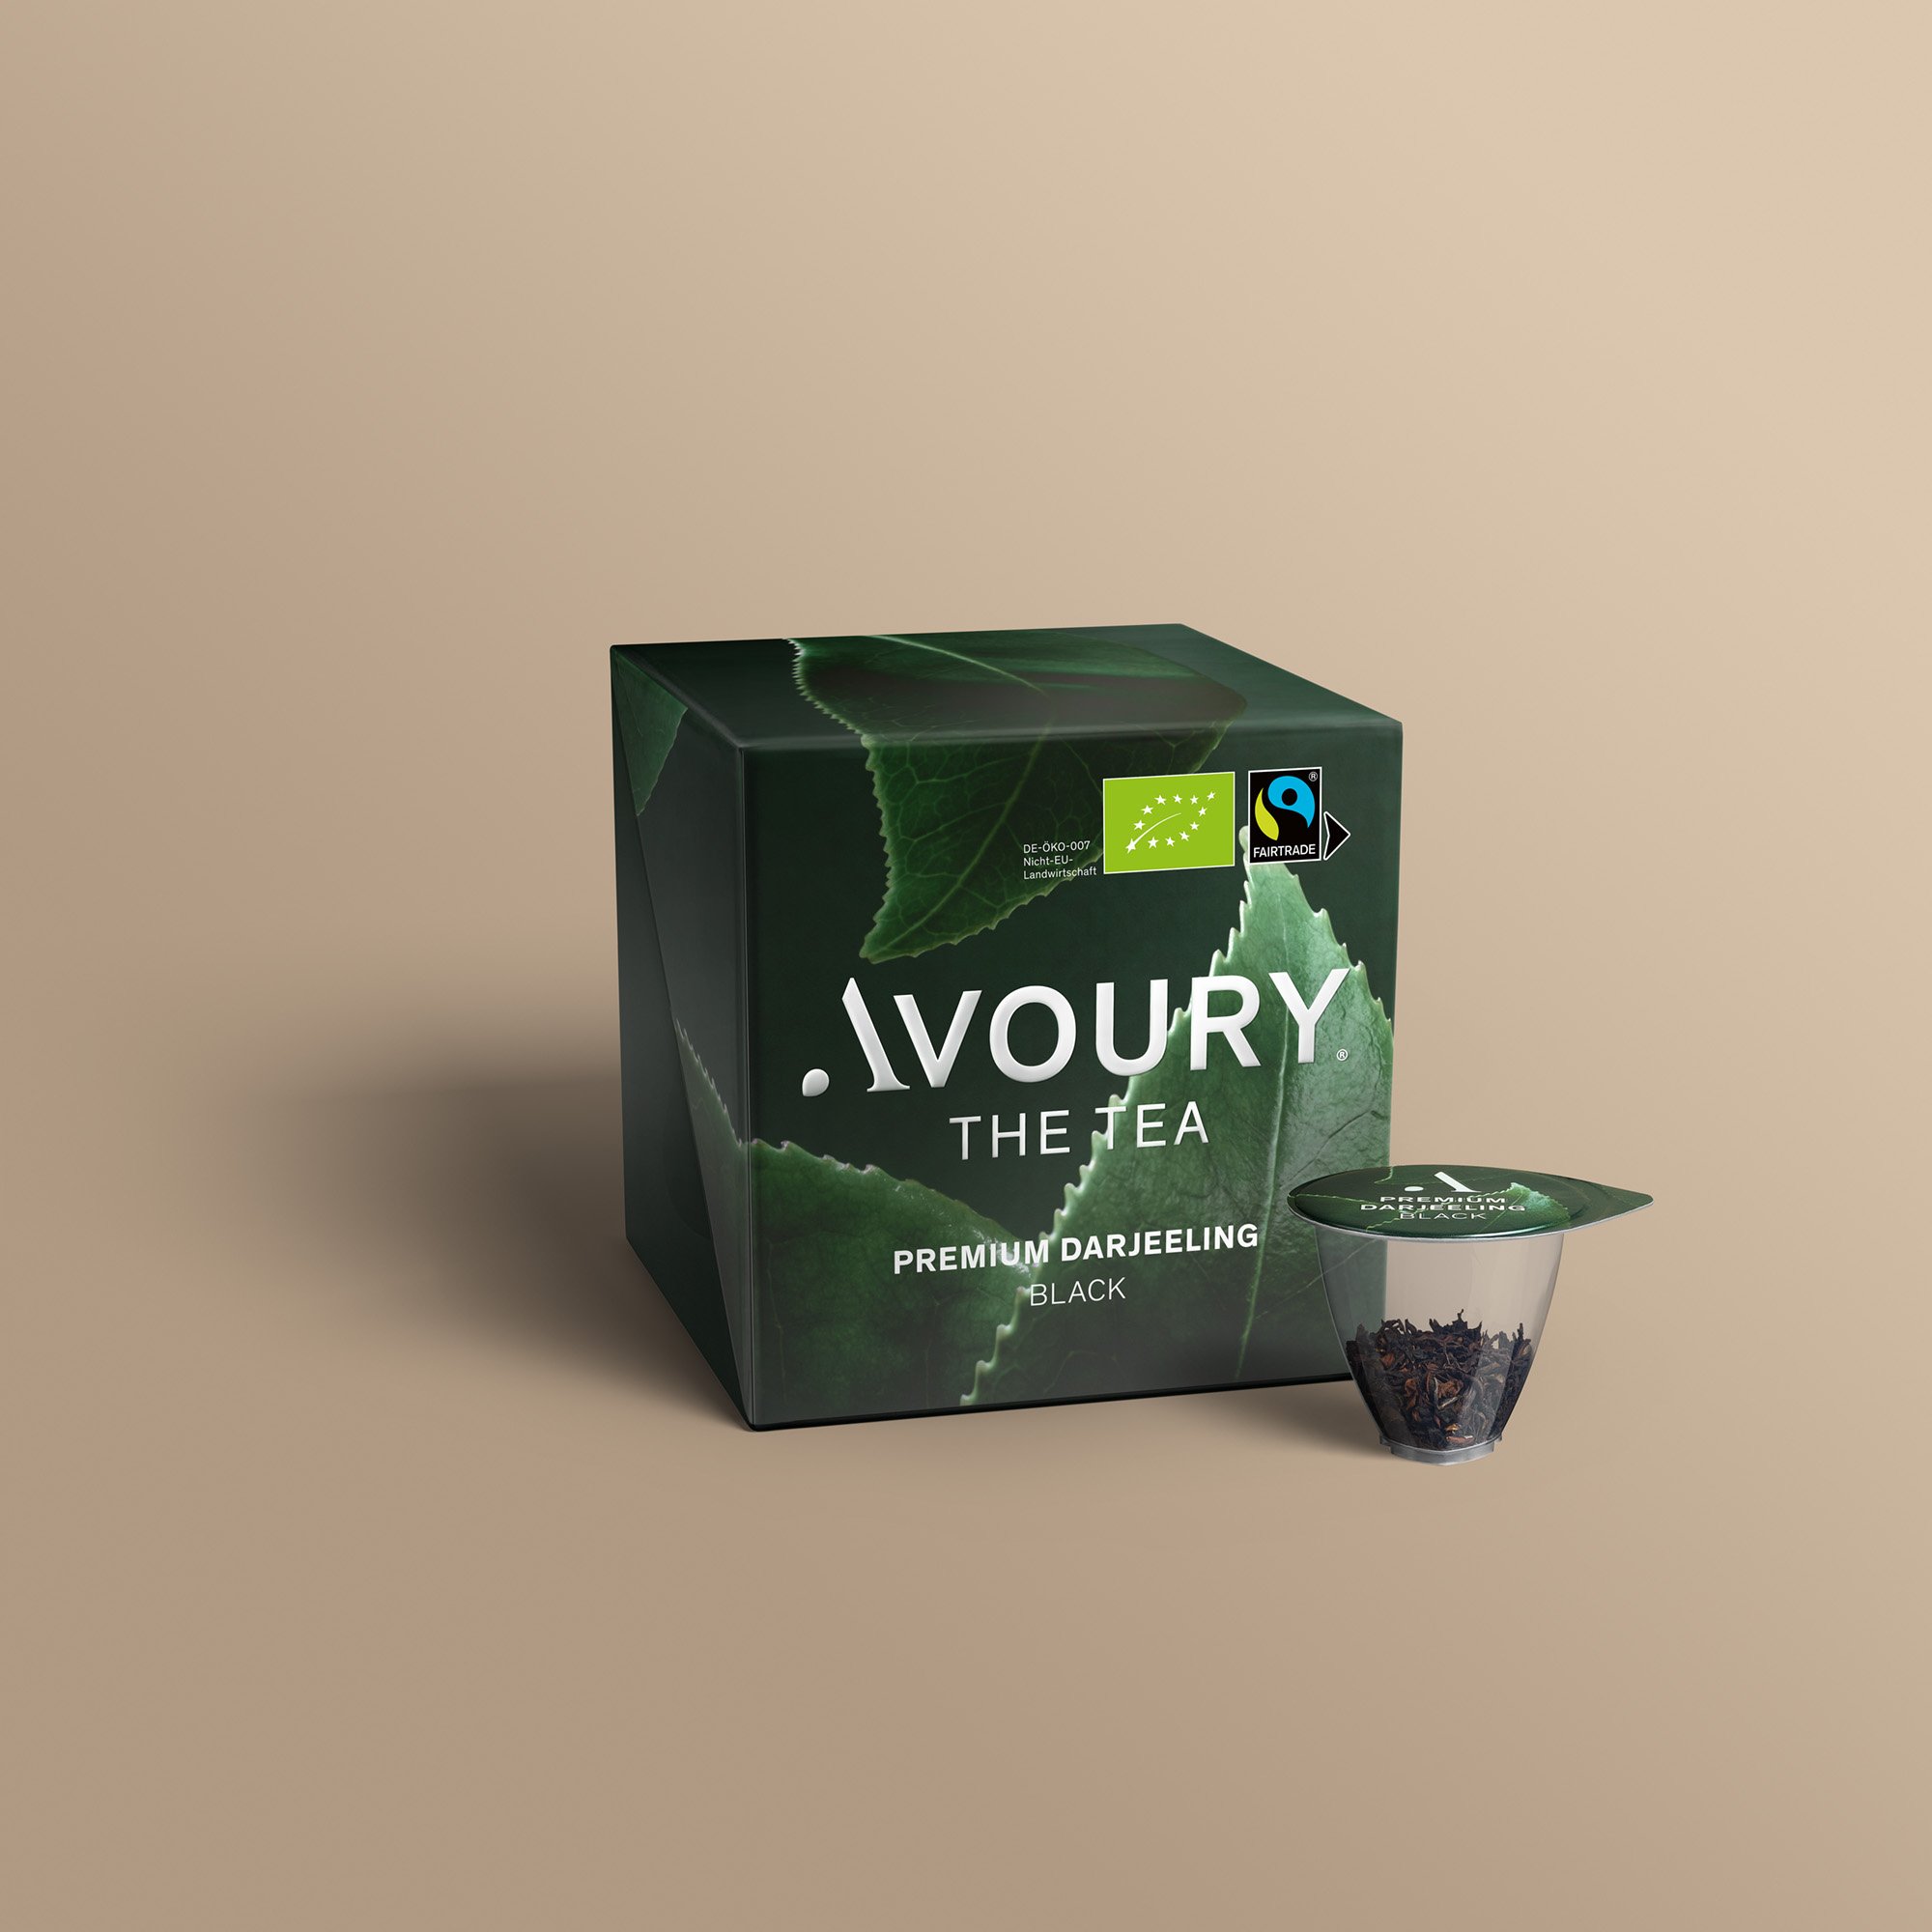 Premium Darjeeling  | Avoury. The Tea.